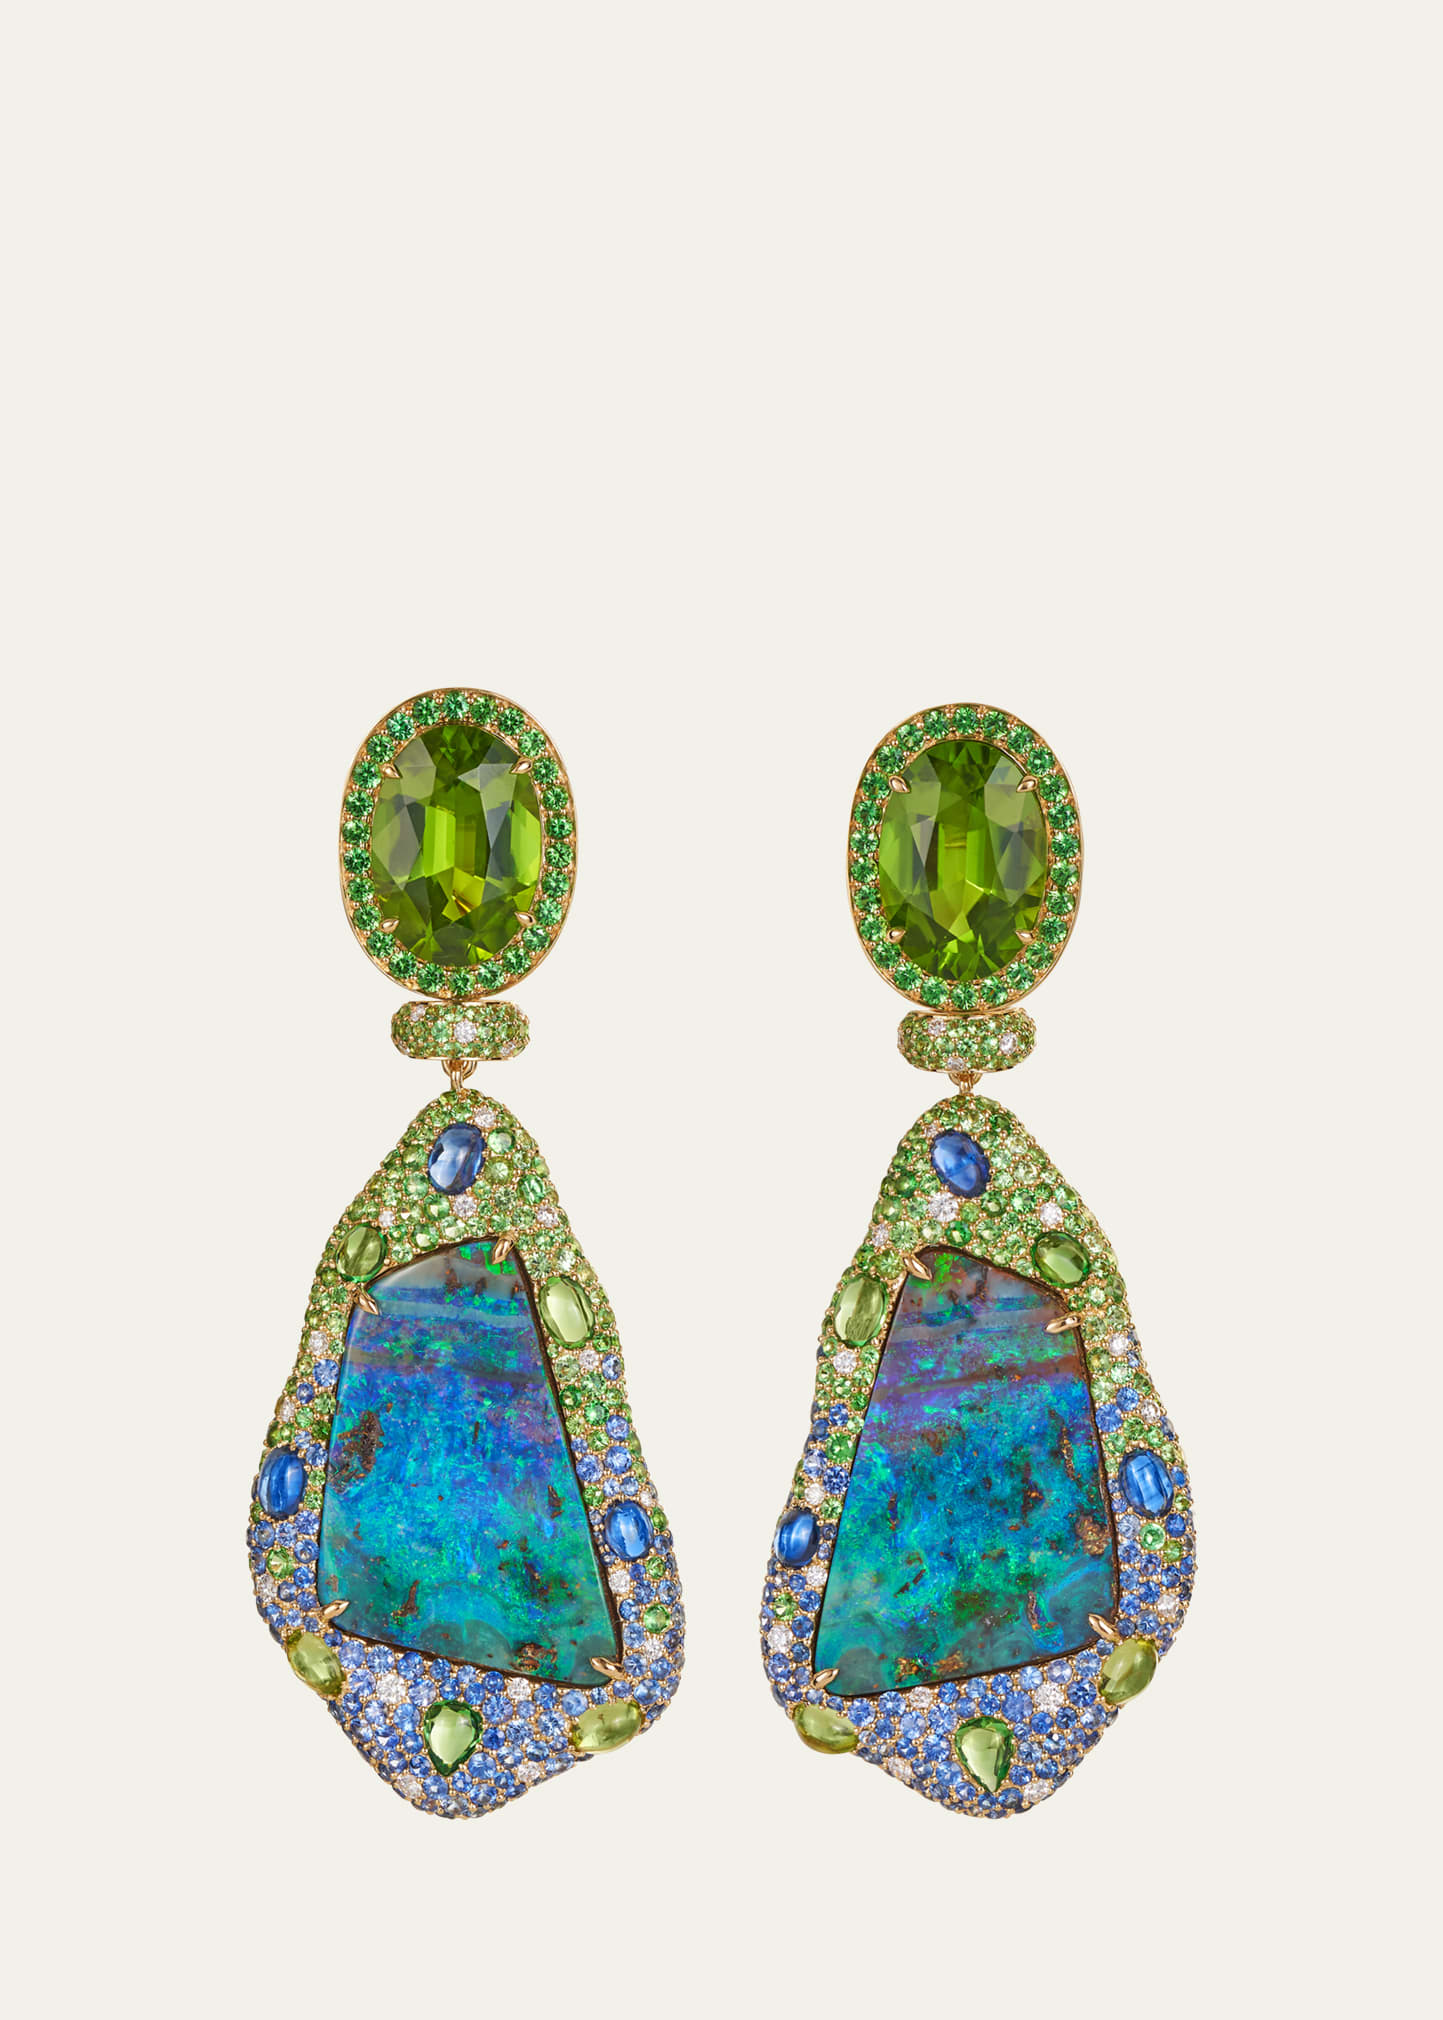 Margot Mckinney Jewelry 14k Yellow Gold Mixed Stone, Diamond, And Opal Earrings In Green